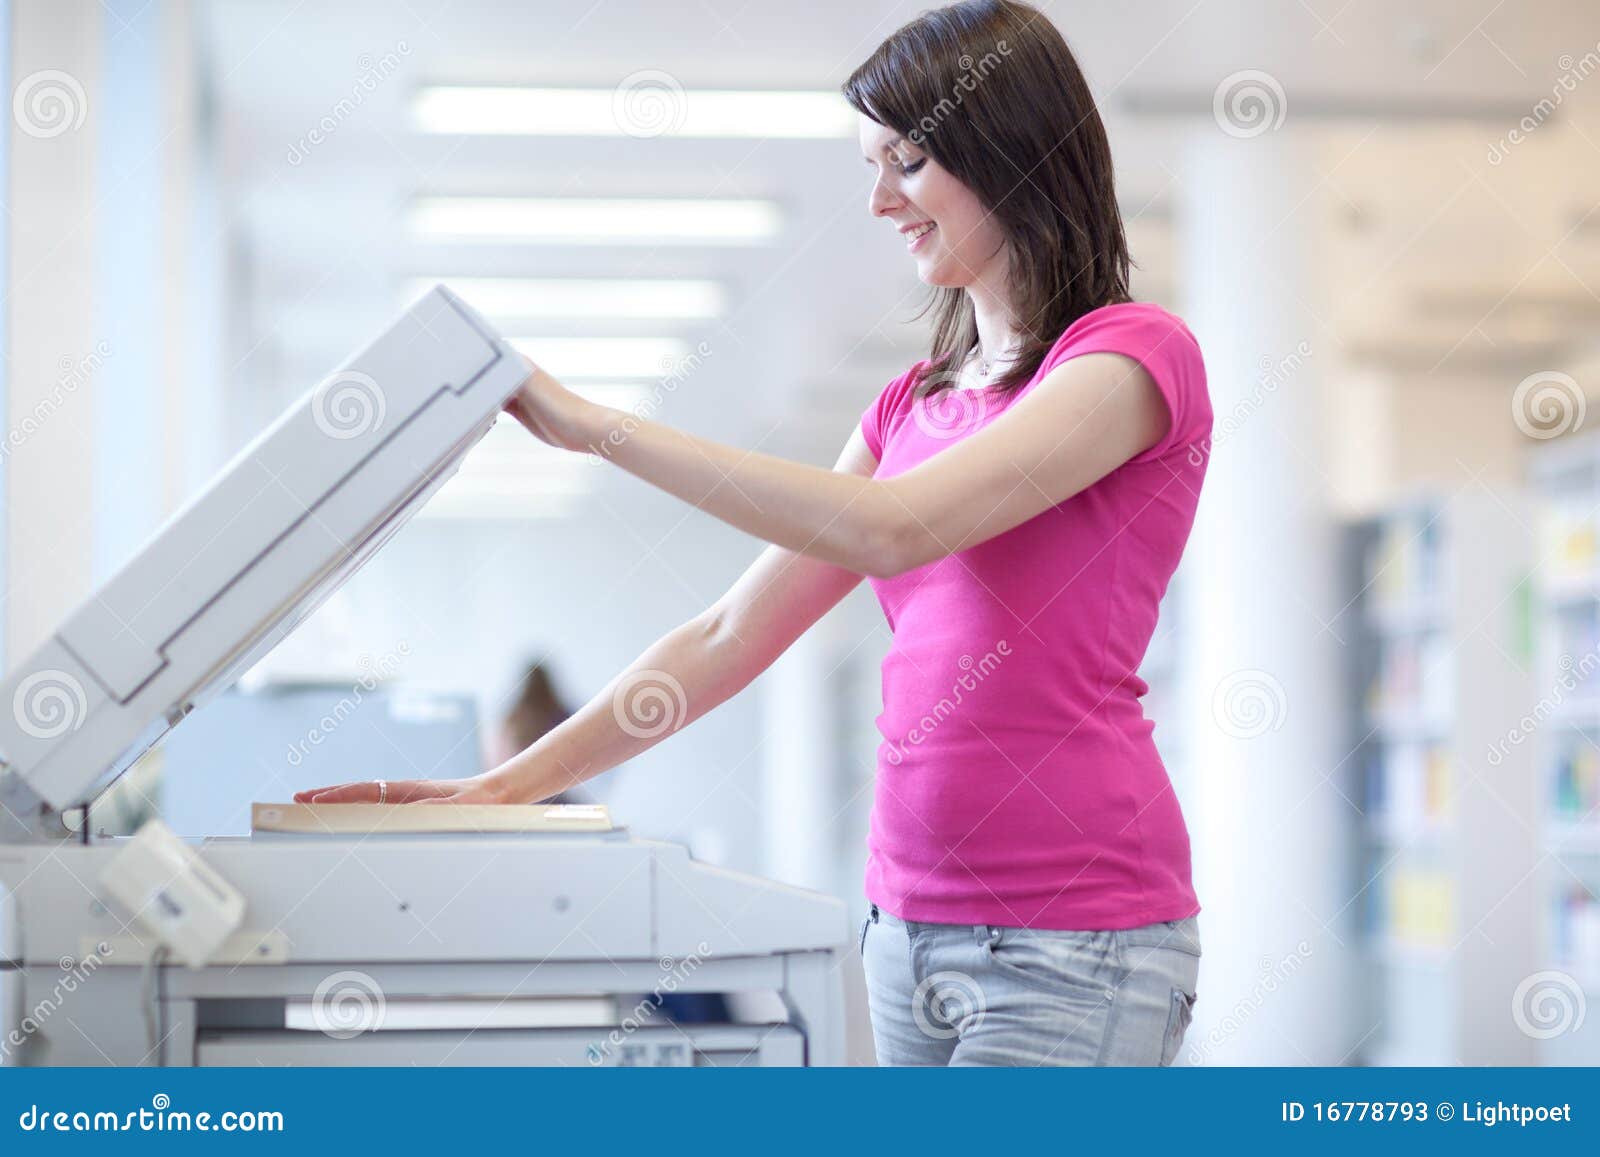 pretty young woman using a copy machine